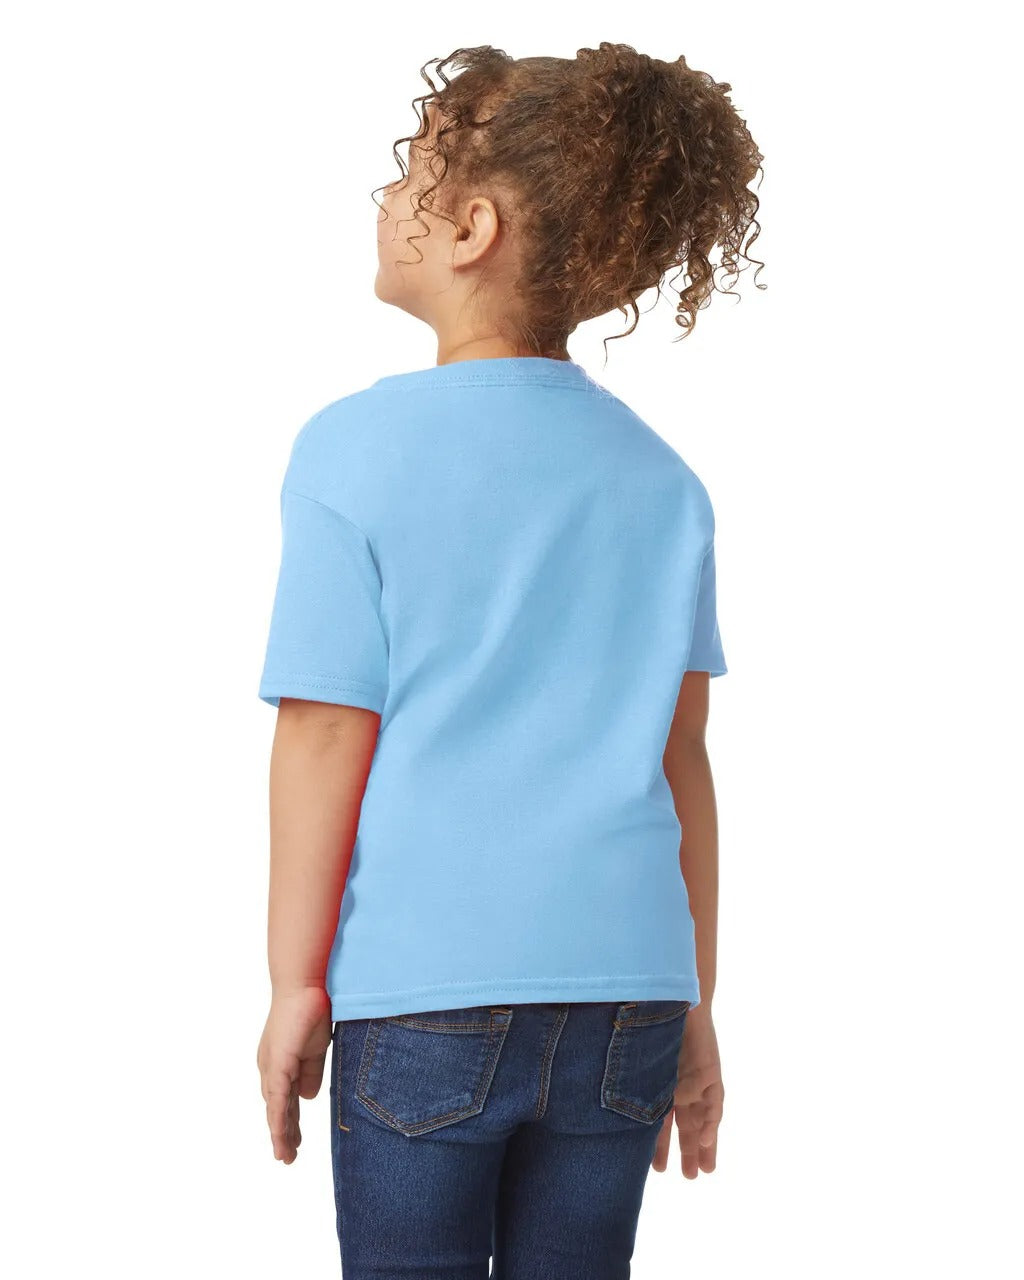 Toddlers Tshirt - Light Blue